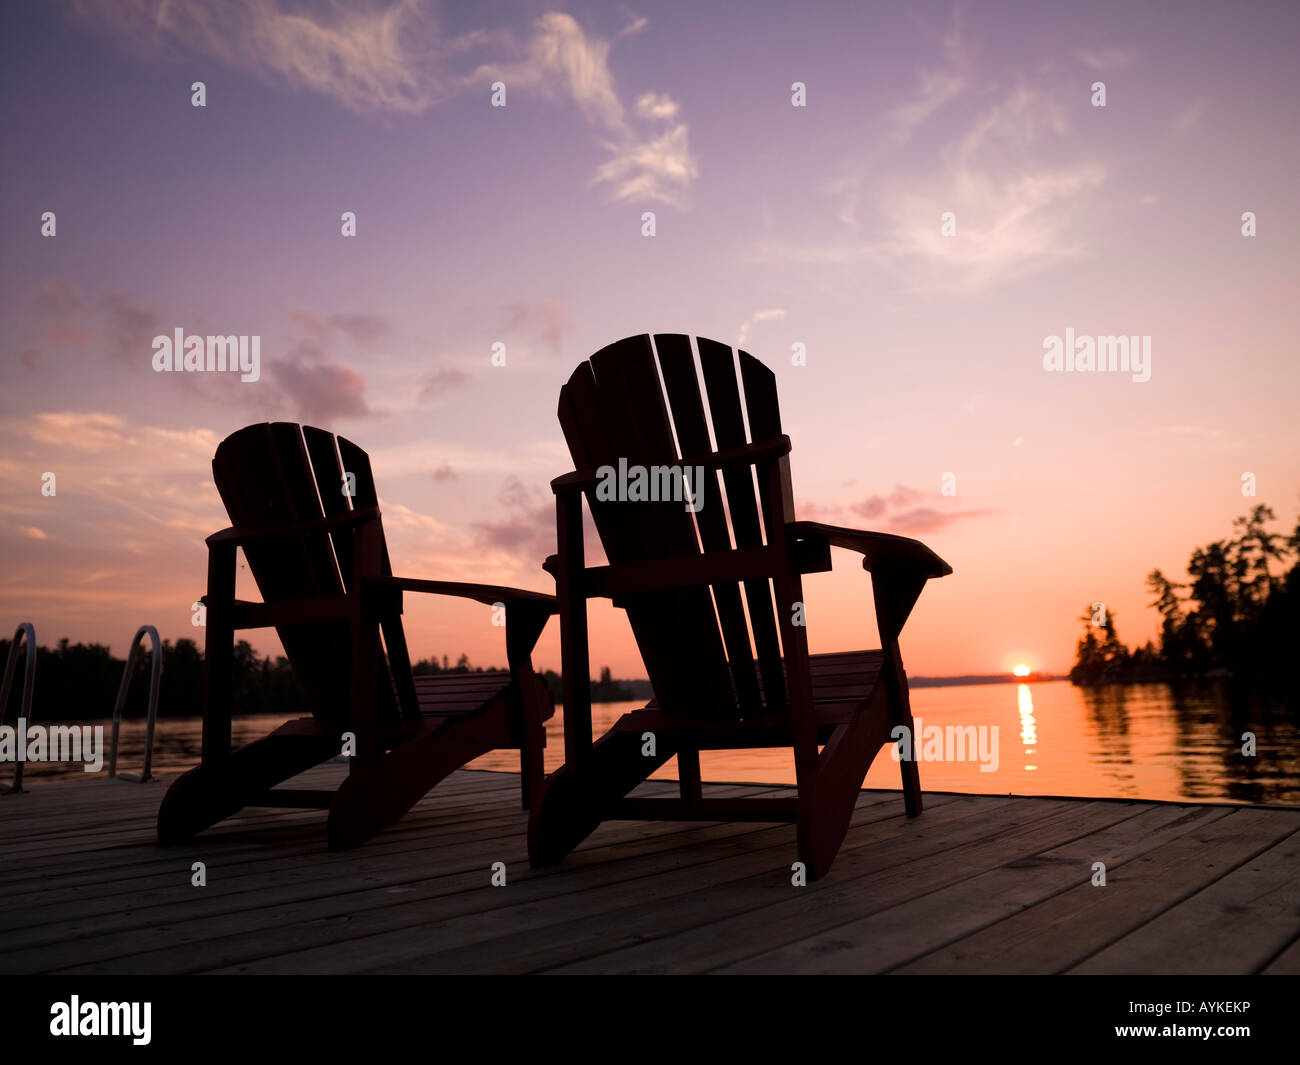 Lake of the Woods, Ontario, Canada, Adirondack chairs ...